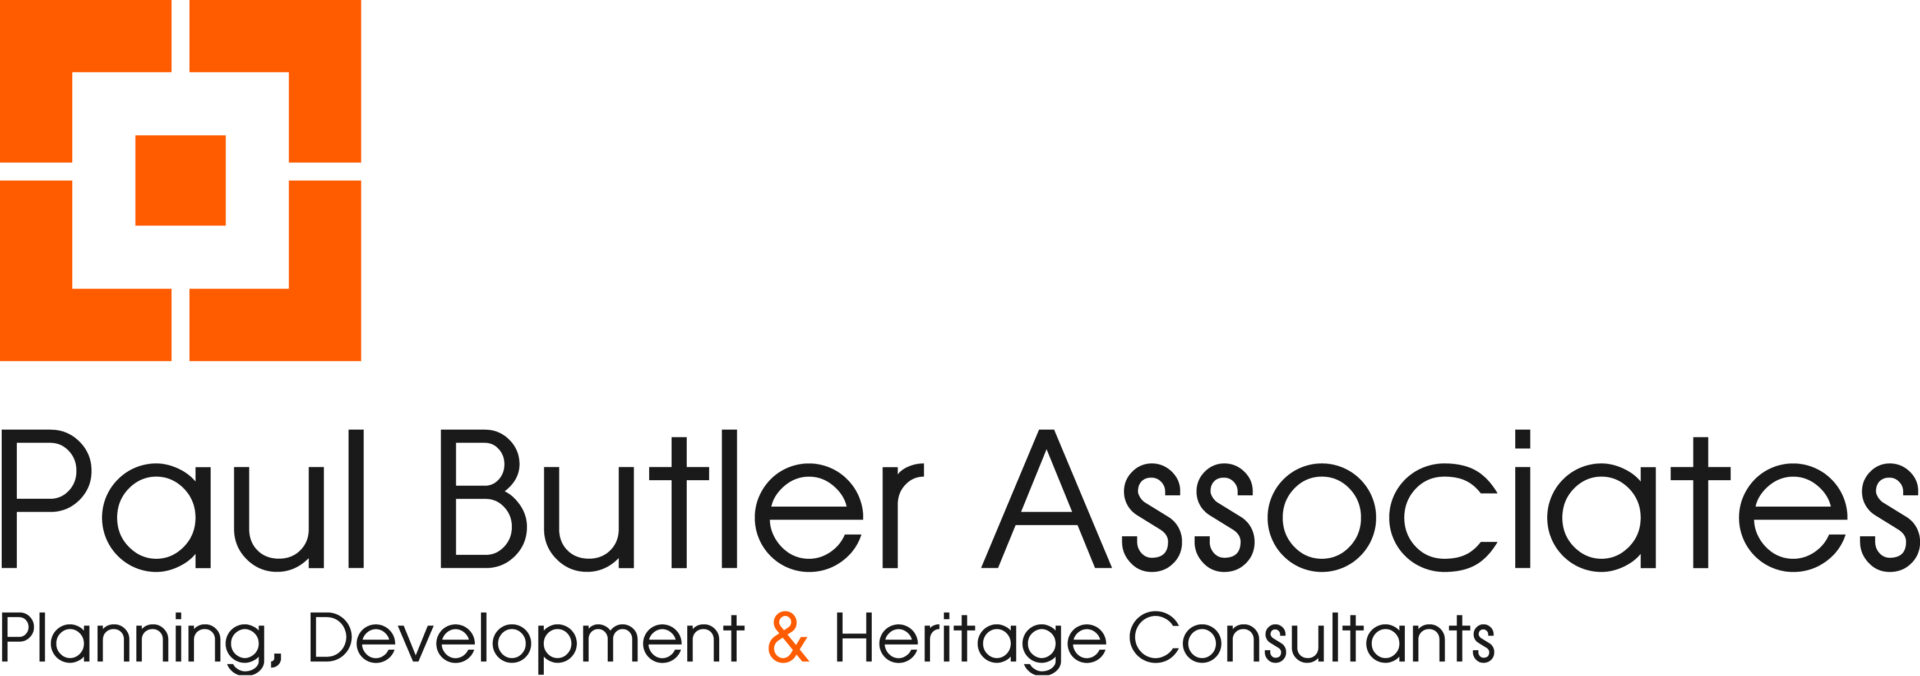 Paul Butler Associates JPG